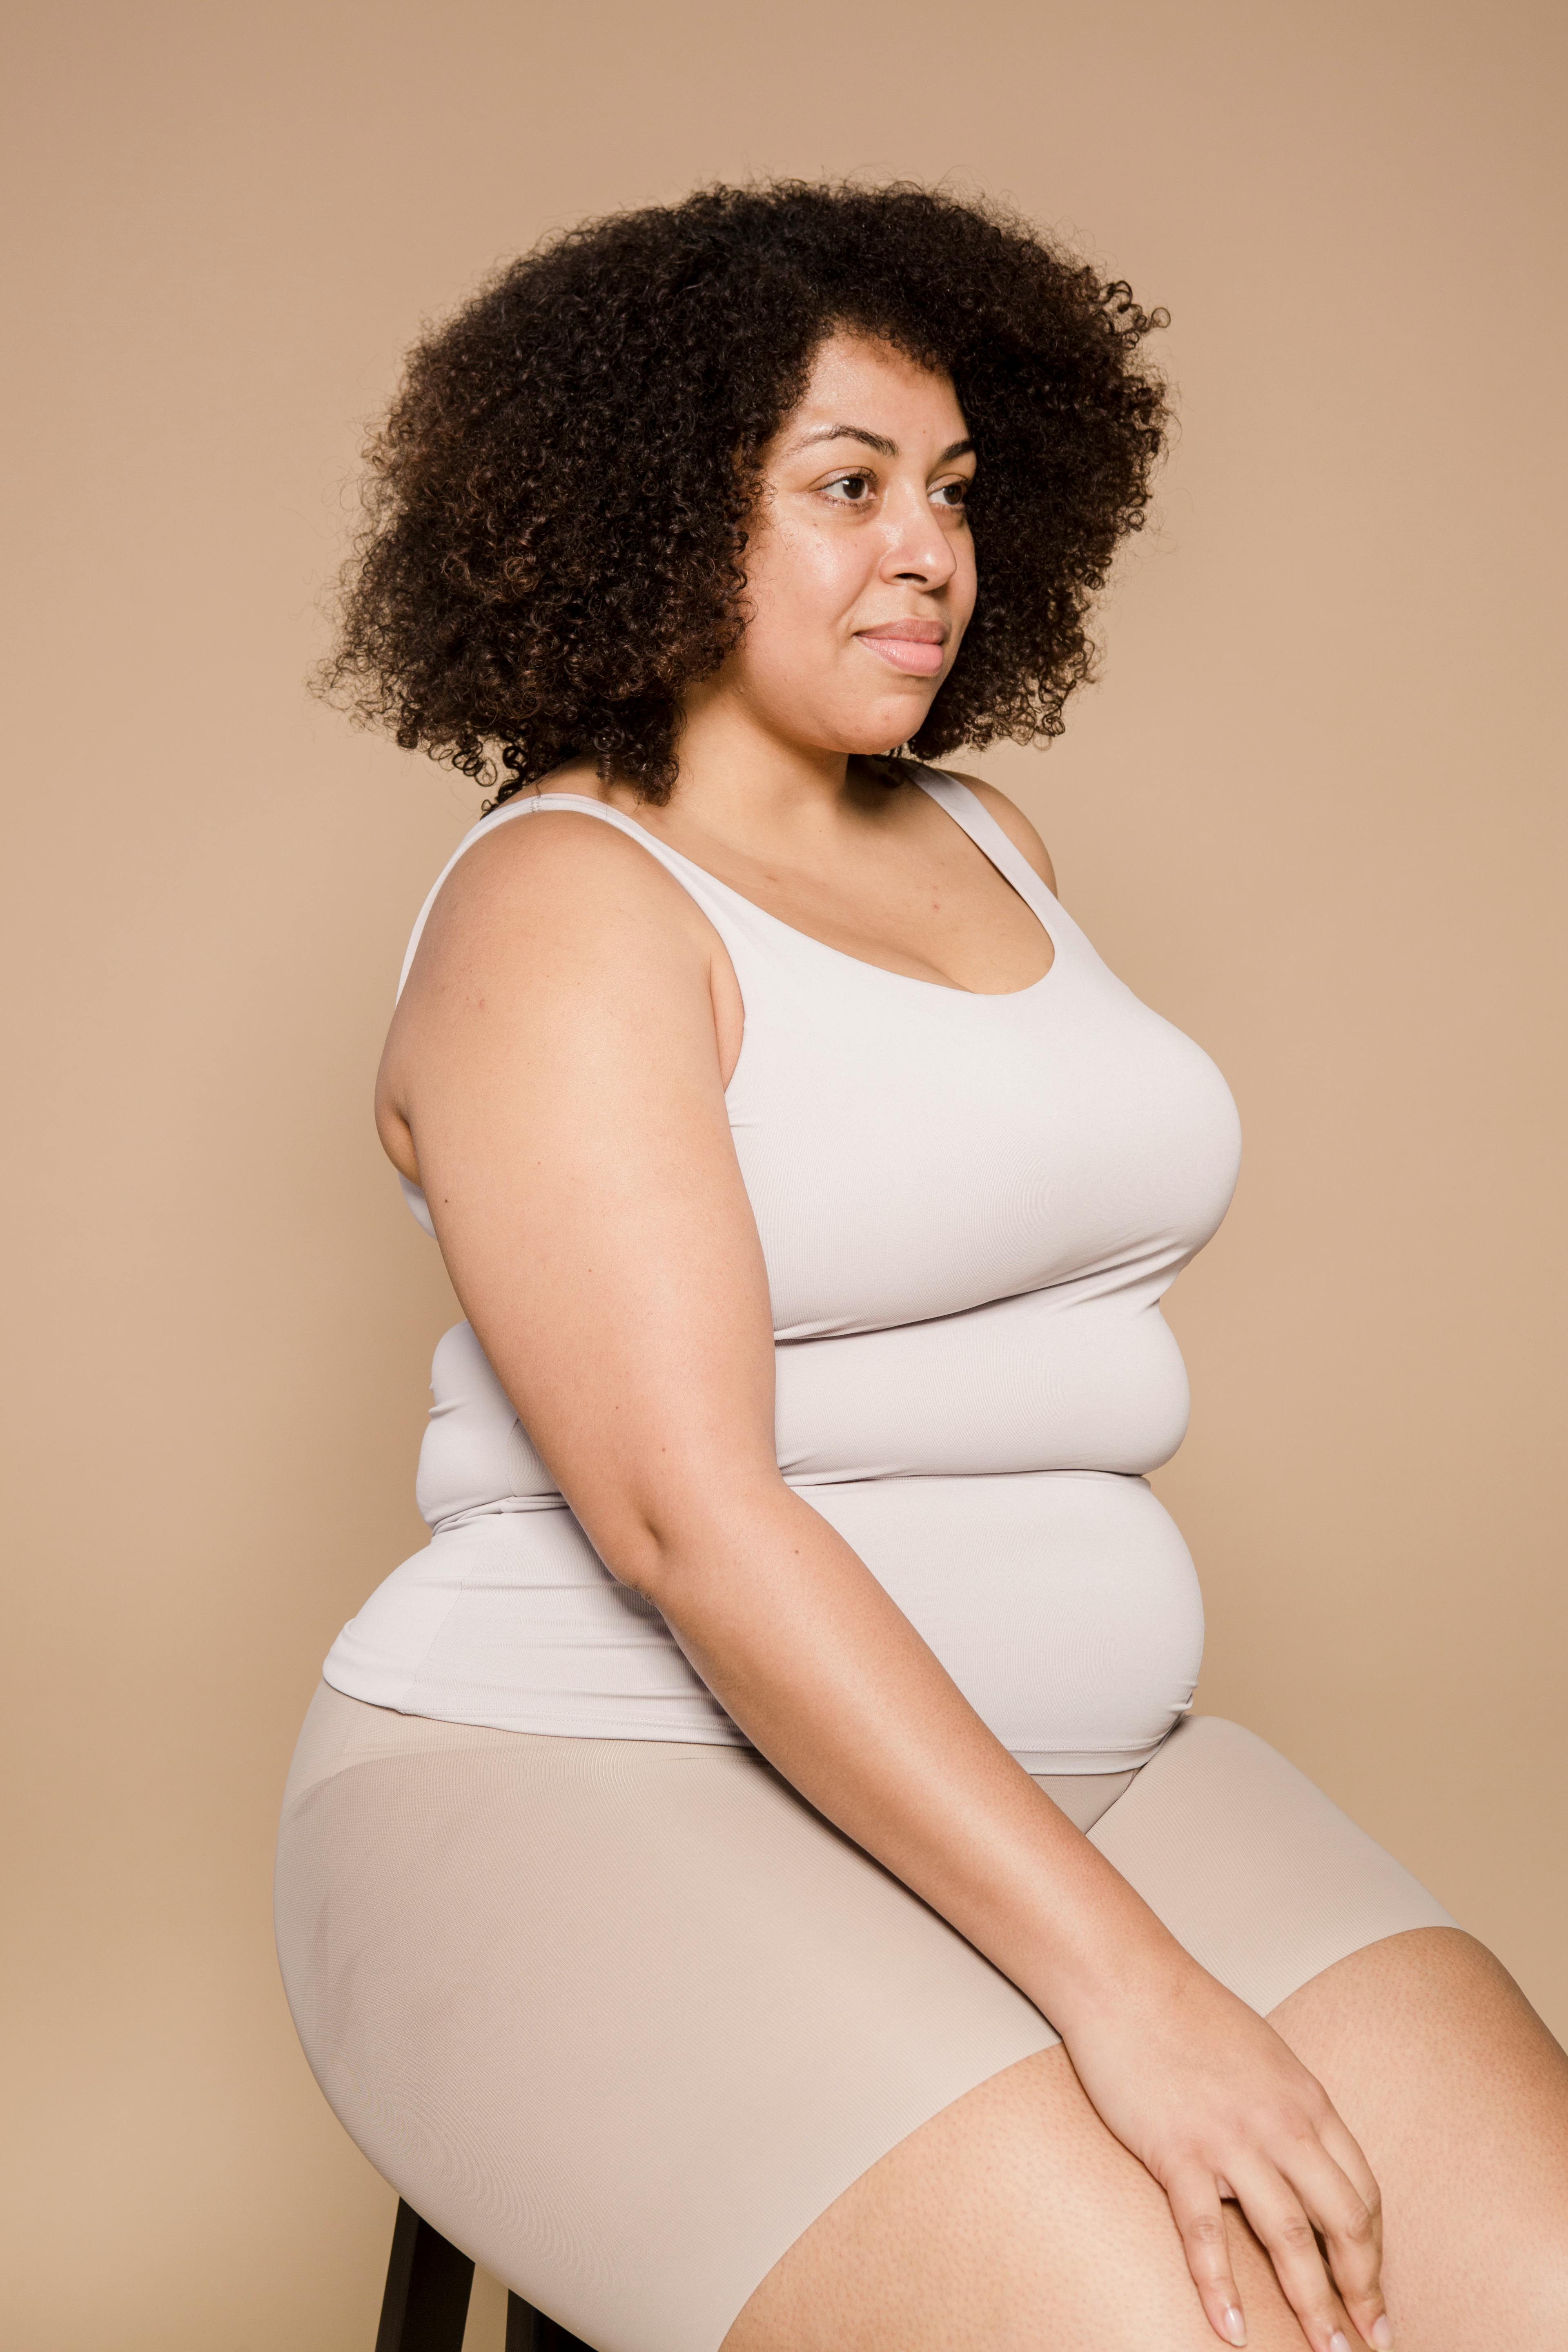 Black overweight woman in tight underwear sitting in studio · Free Stock  Photo